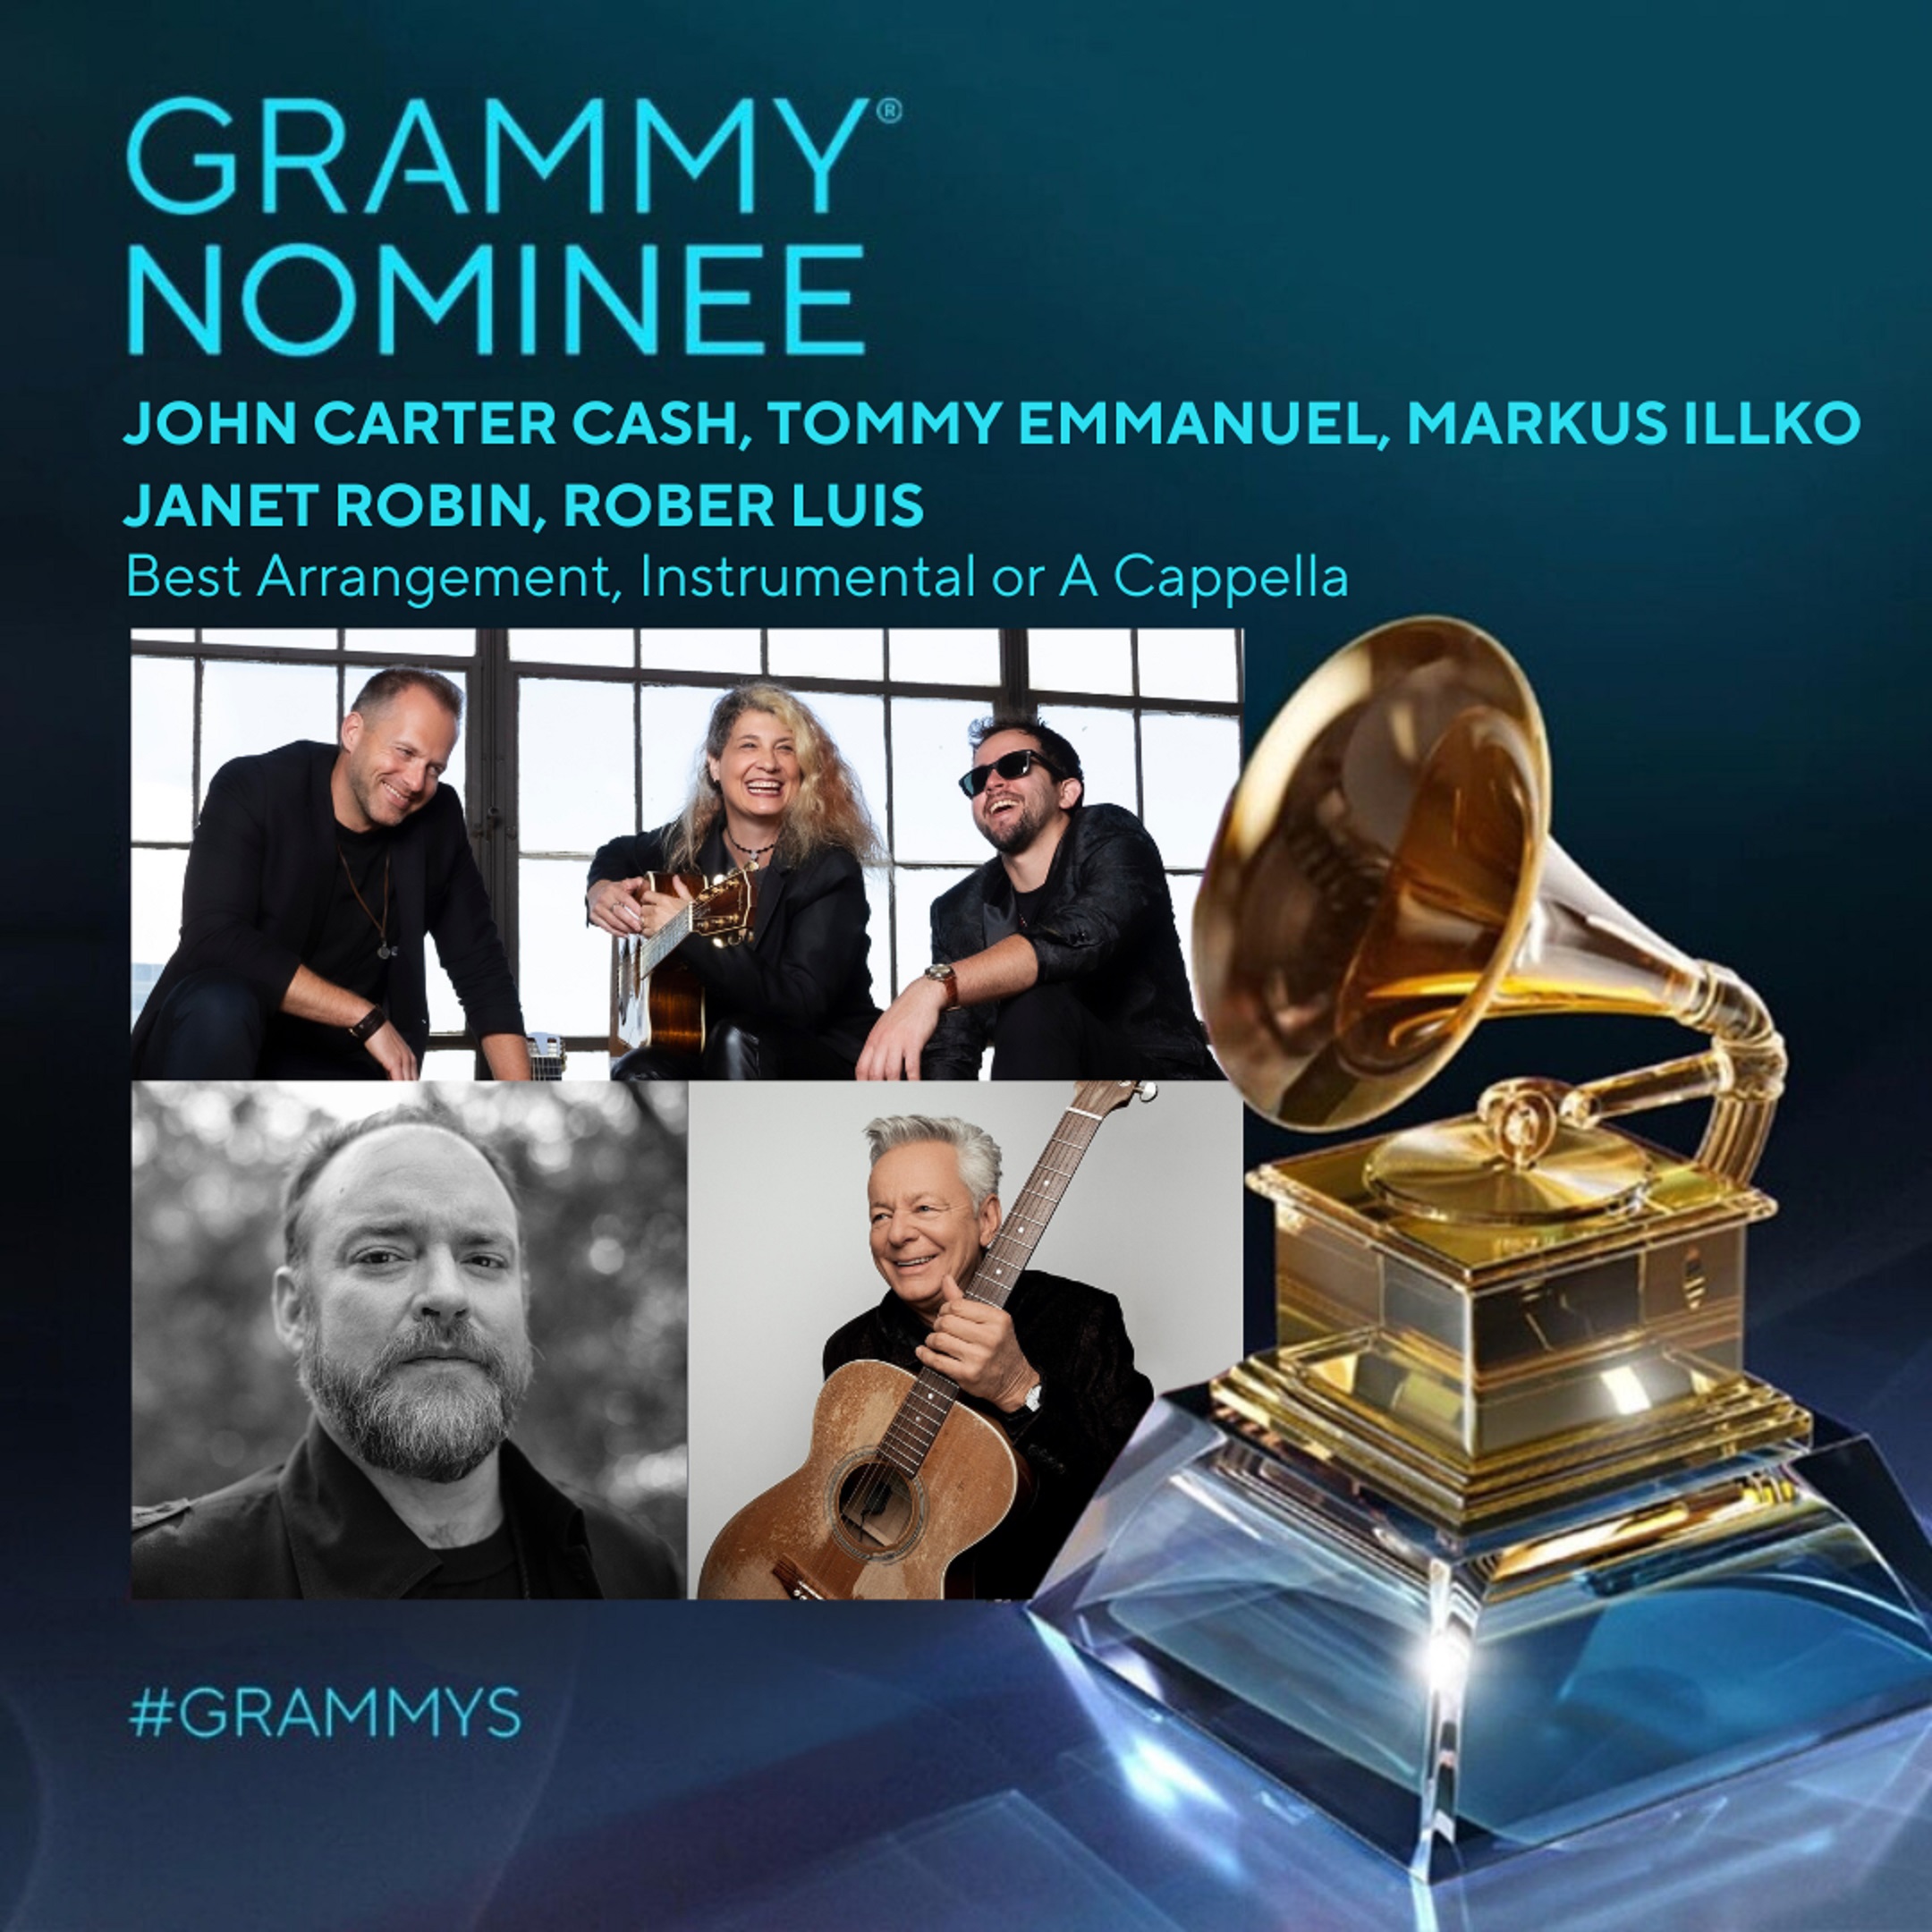 Grammy Nomination for The String Revolution and Tommy Emmanuel